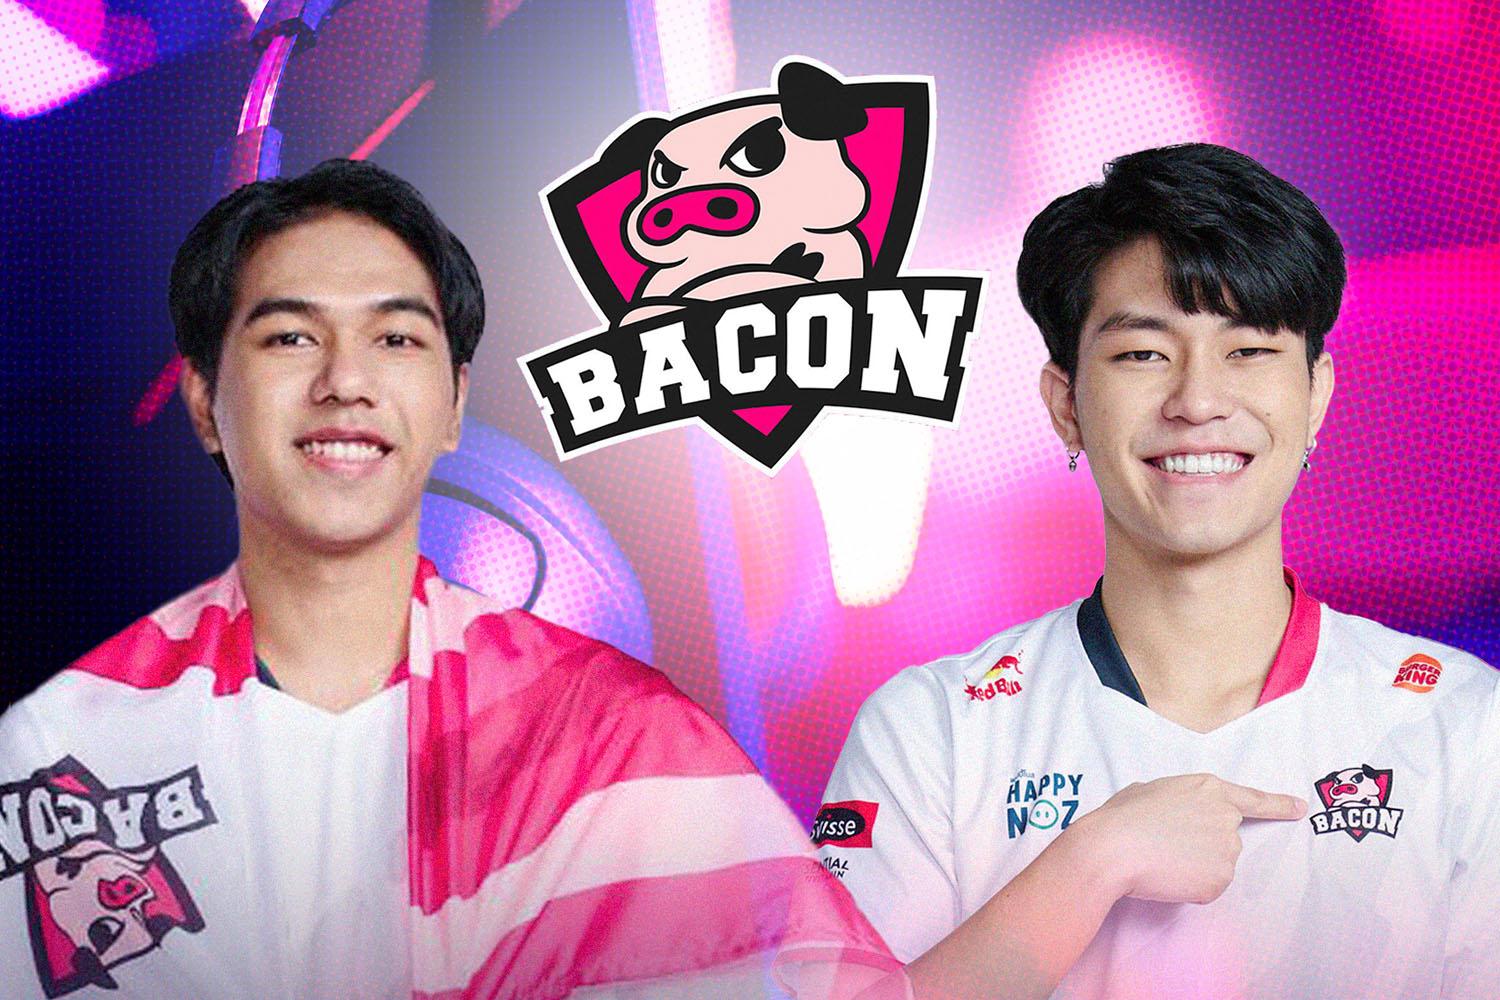 Bacon-Time-new-era-SPACEBAR-Hero.jpg